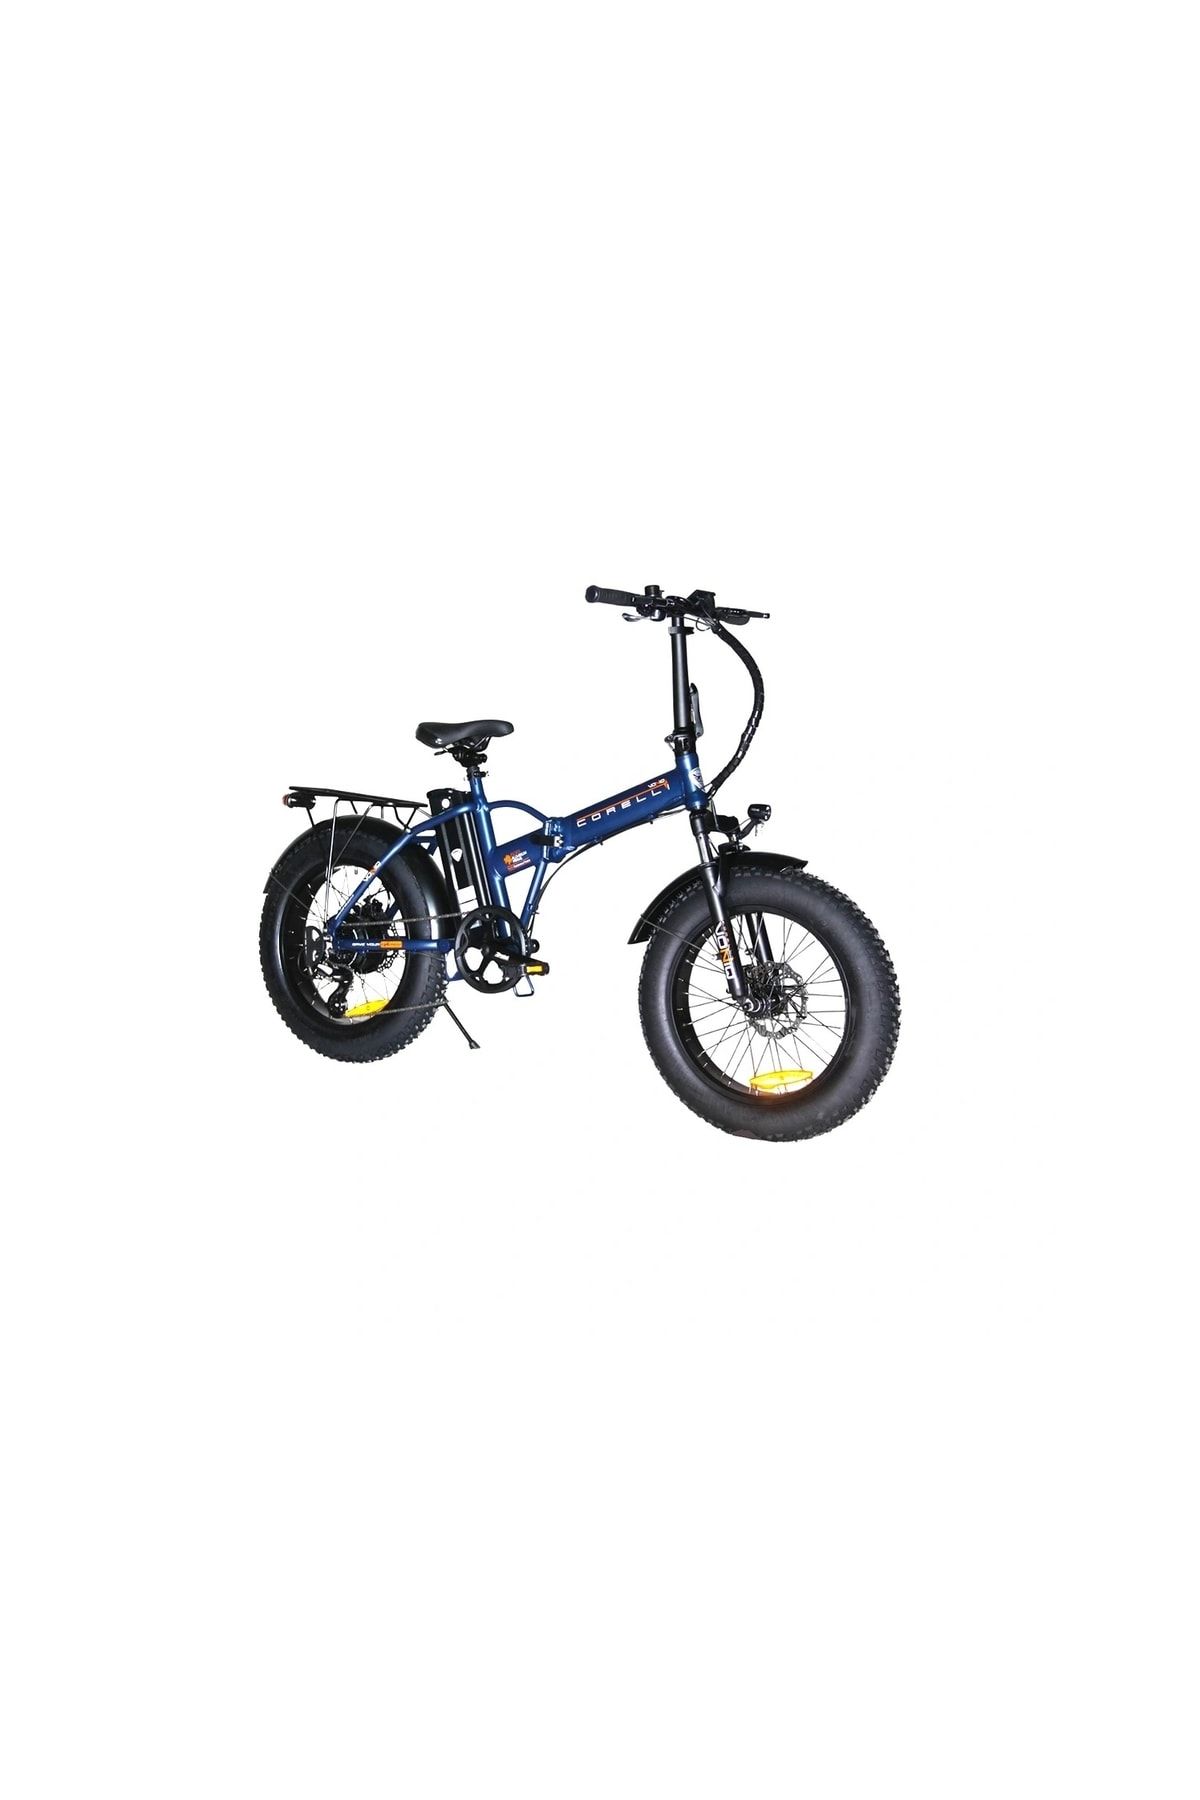 Corelli Vonıq Fat Bıke Elektrikli Katlanır Bisikleti Md 42cm 20 Jant 8 Vites Navy Blue